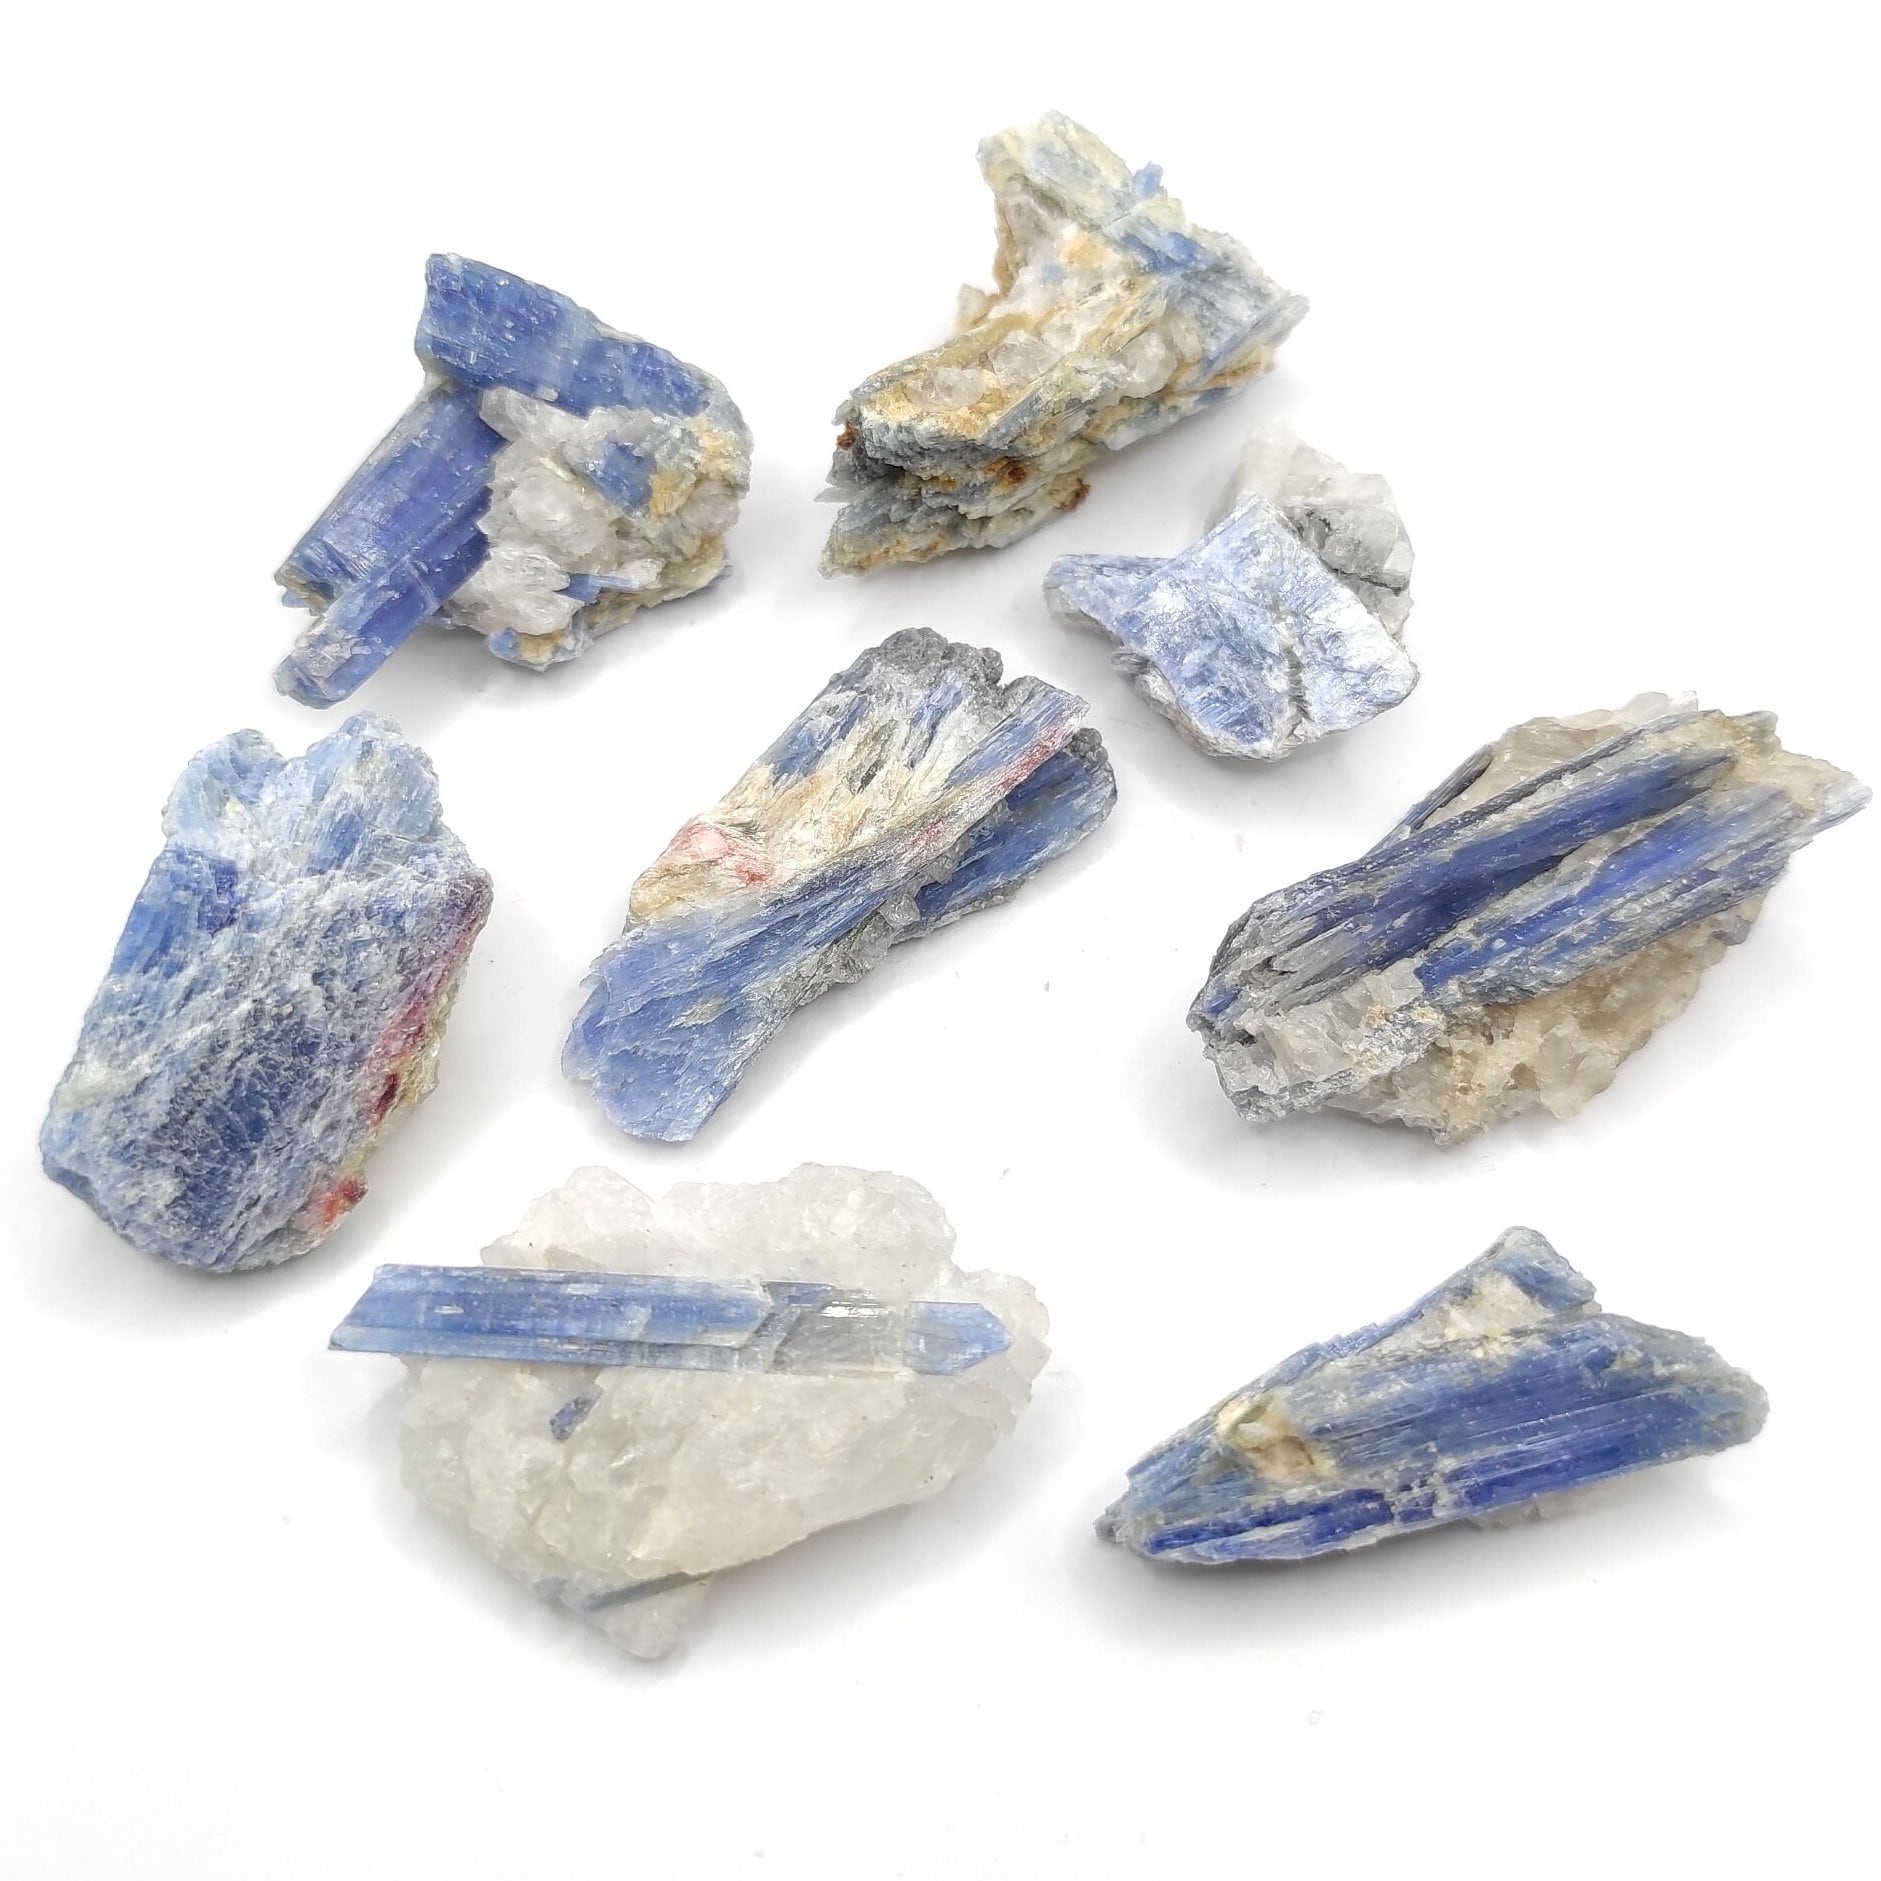 142g (8pcs) Lot of Kyanite with Quartz - Rio do Sul, Brazil - Natural Blue Kyanite Crystal Cluster - Rough Kyanite Crystal - Raw Kyanite